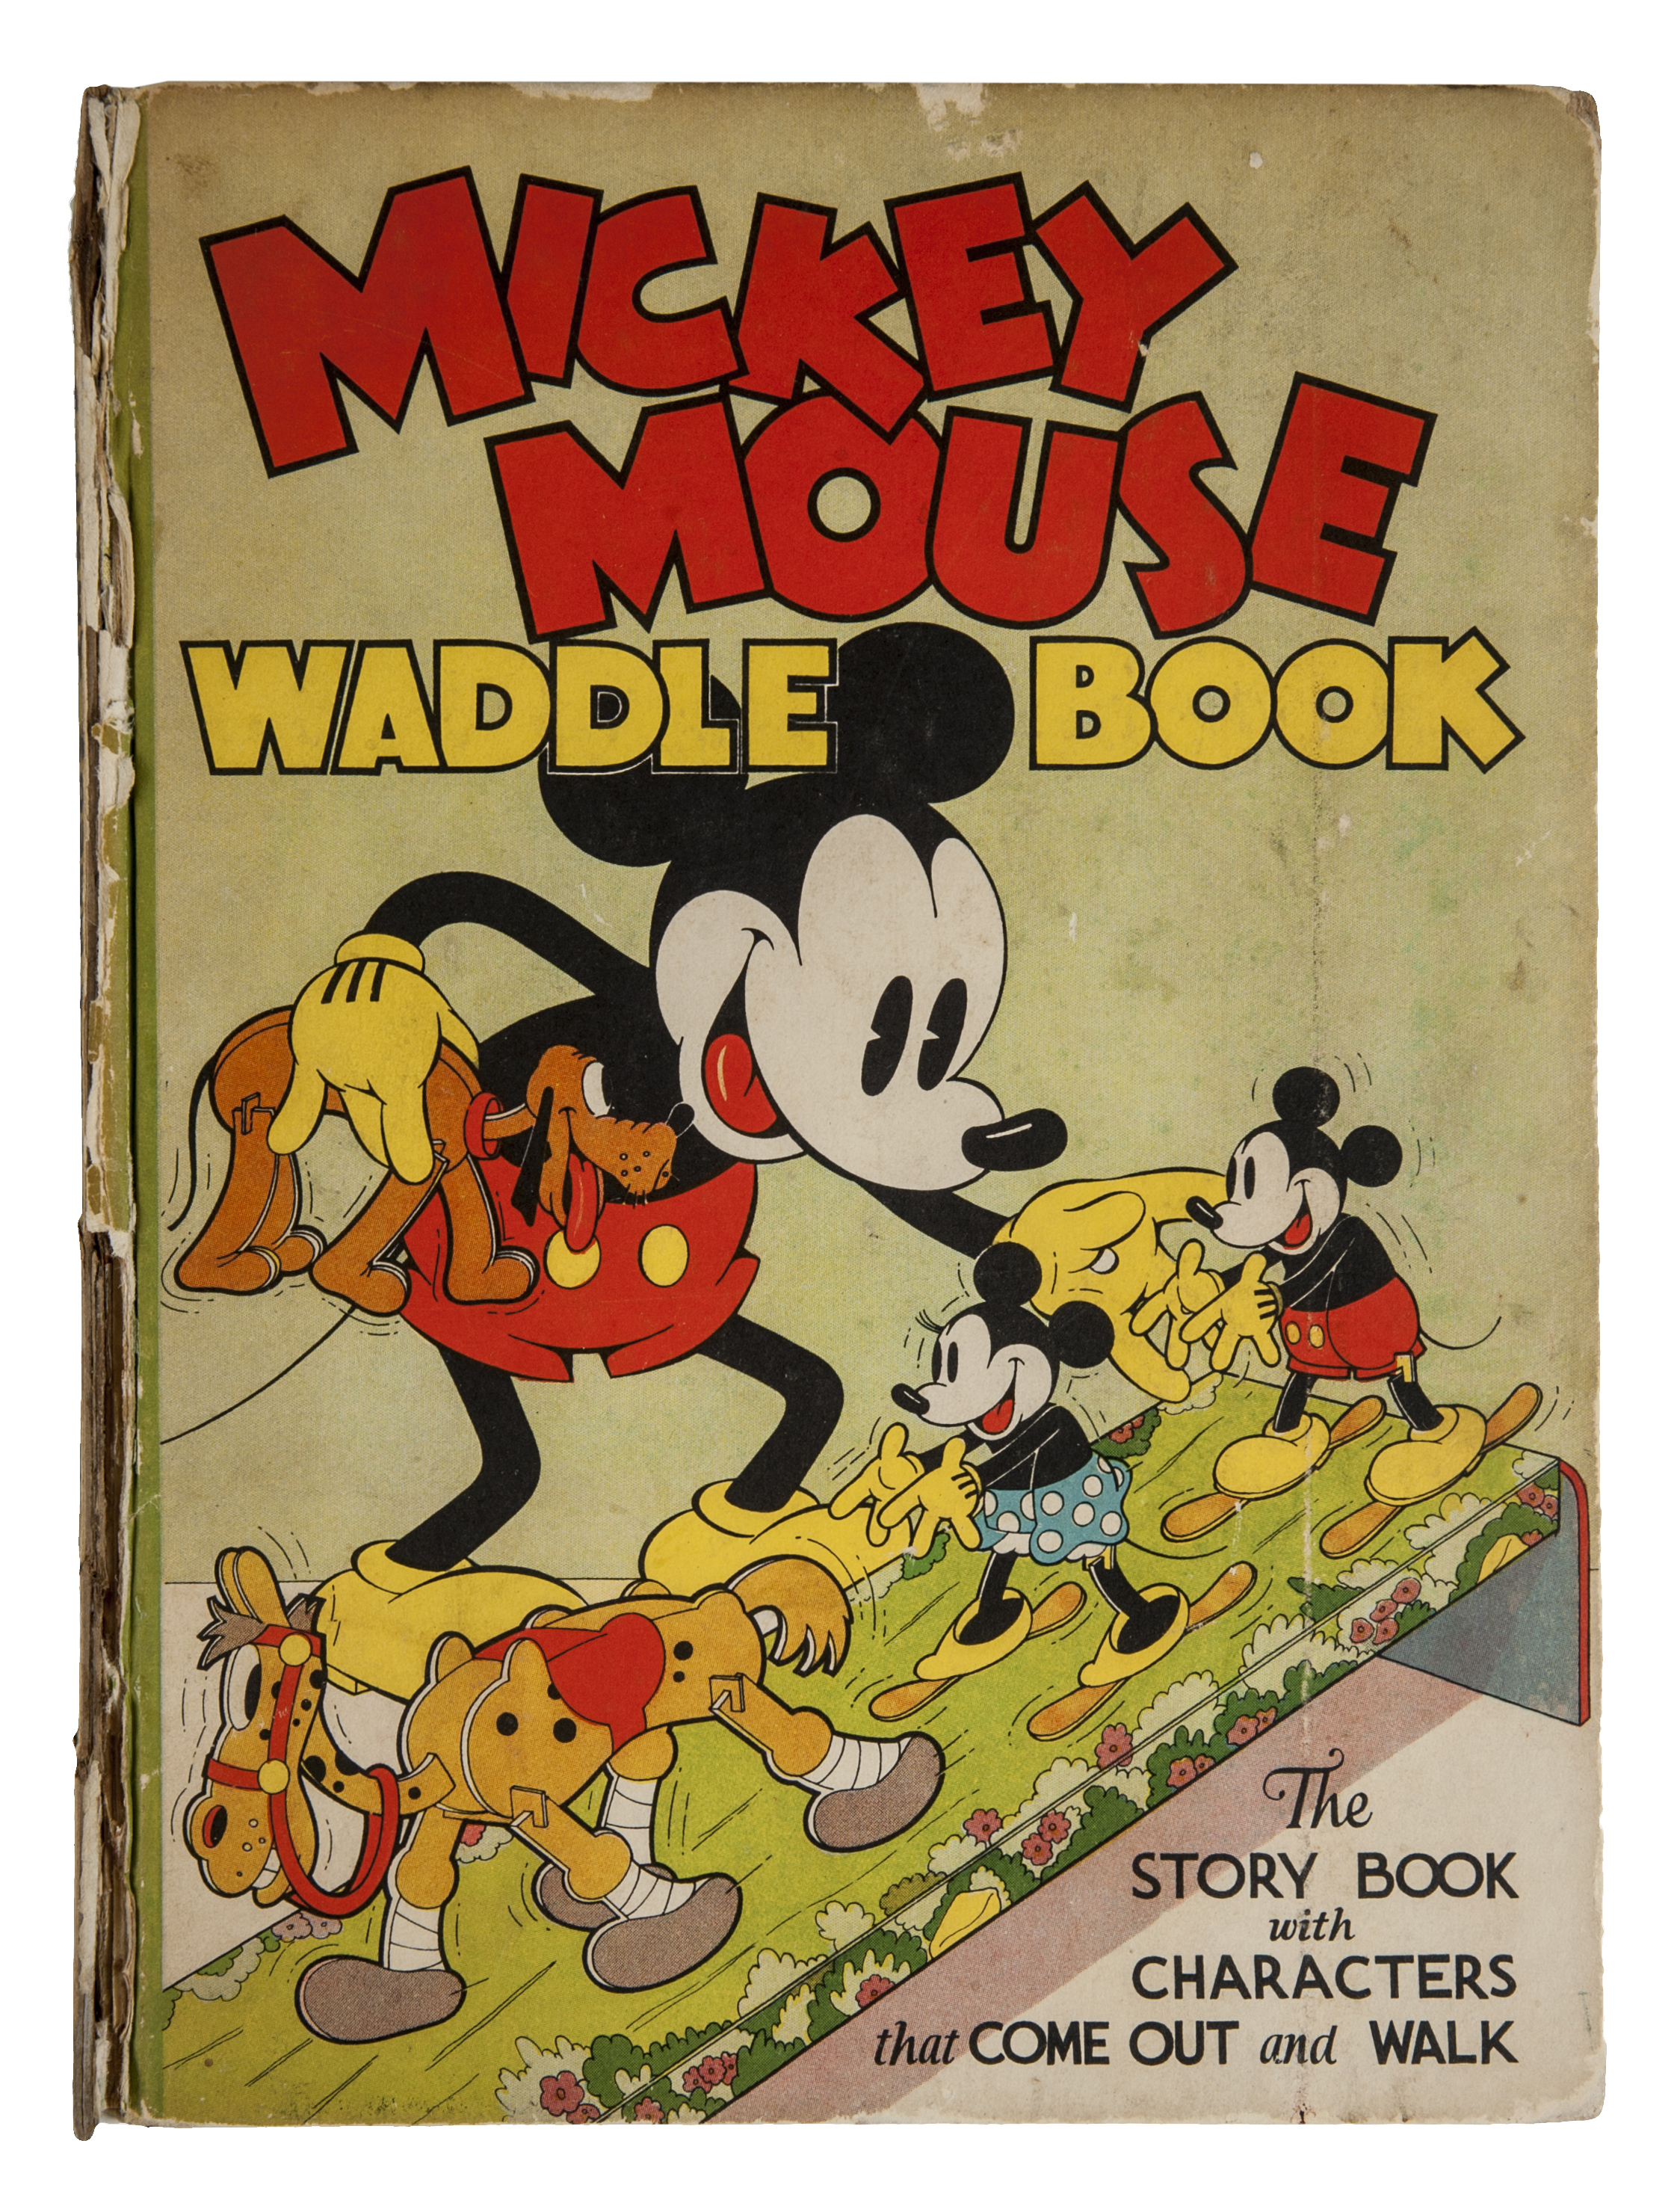 Книга уолт дисней. Микки Маус книга. Клуб Микки Мауса DVD. The first Mickey Mouse book 1930. Waddles перевод.